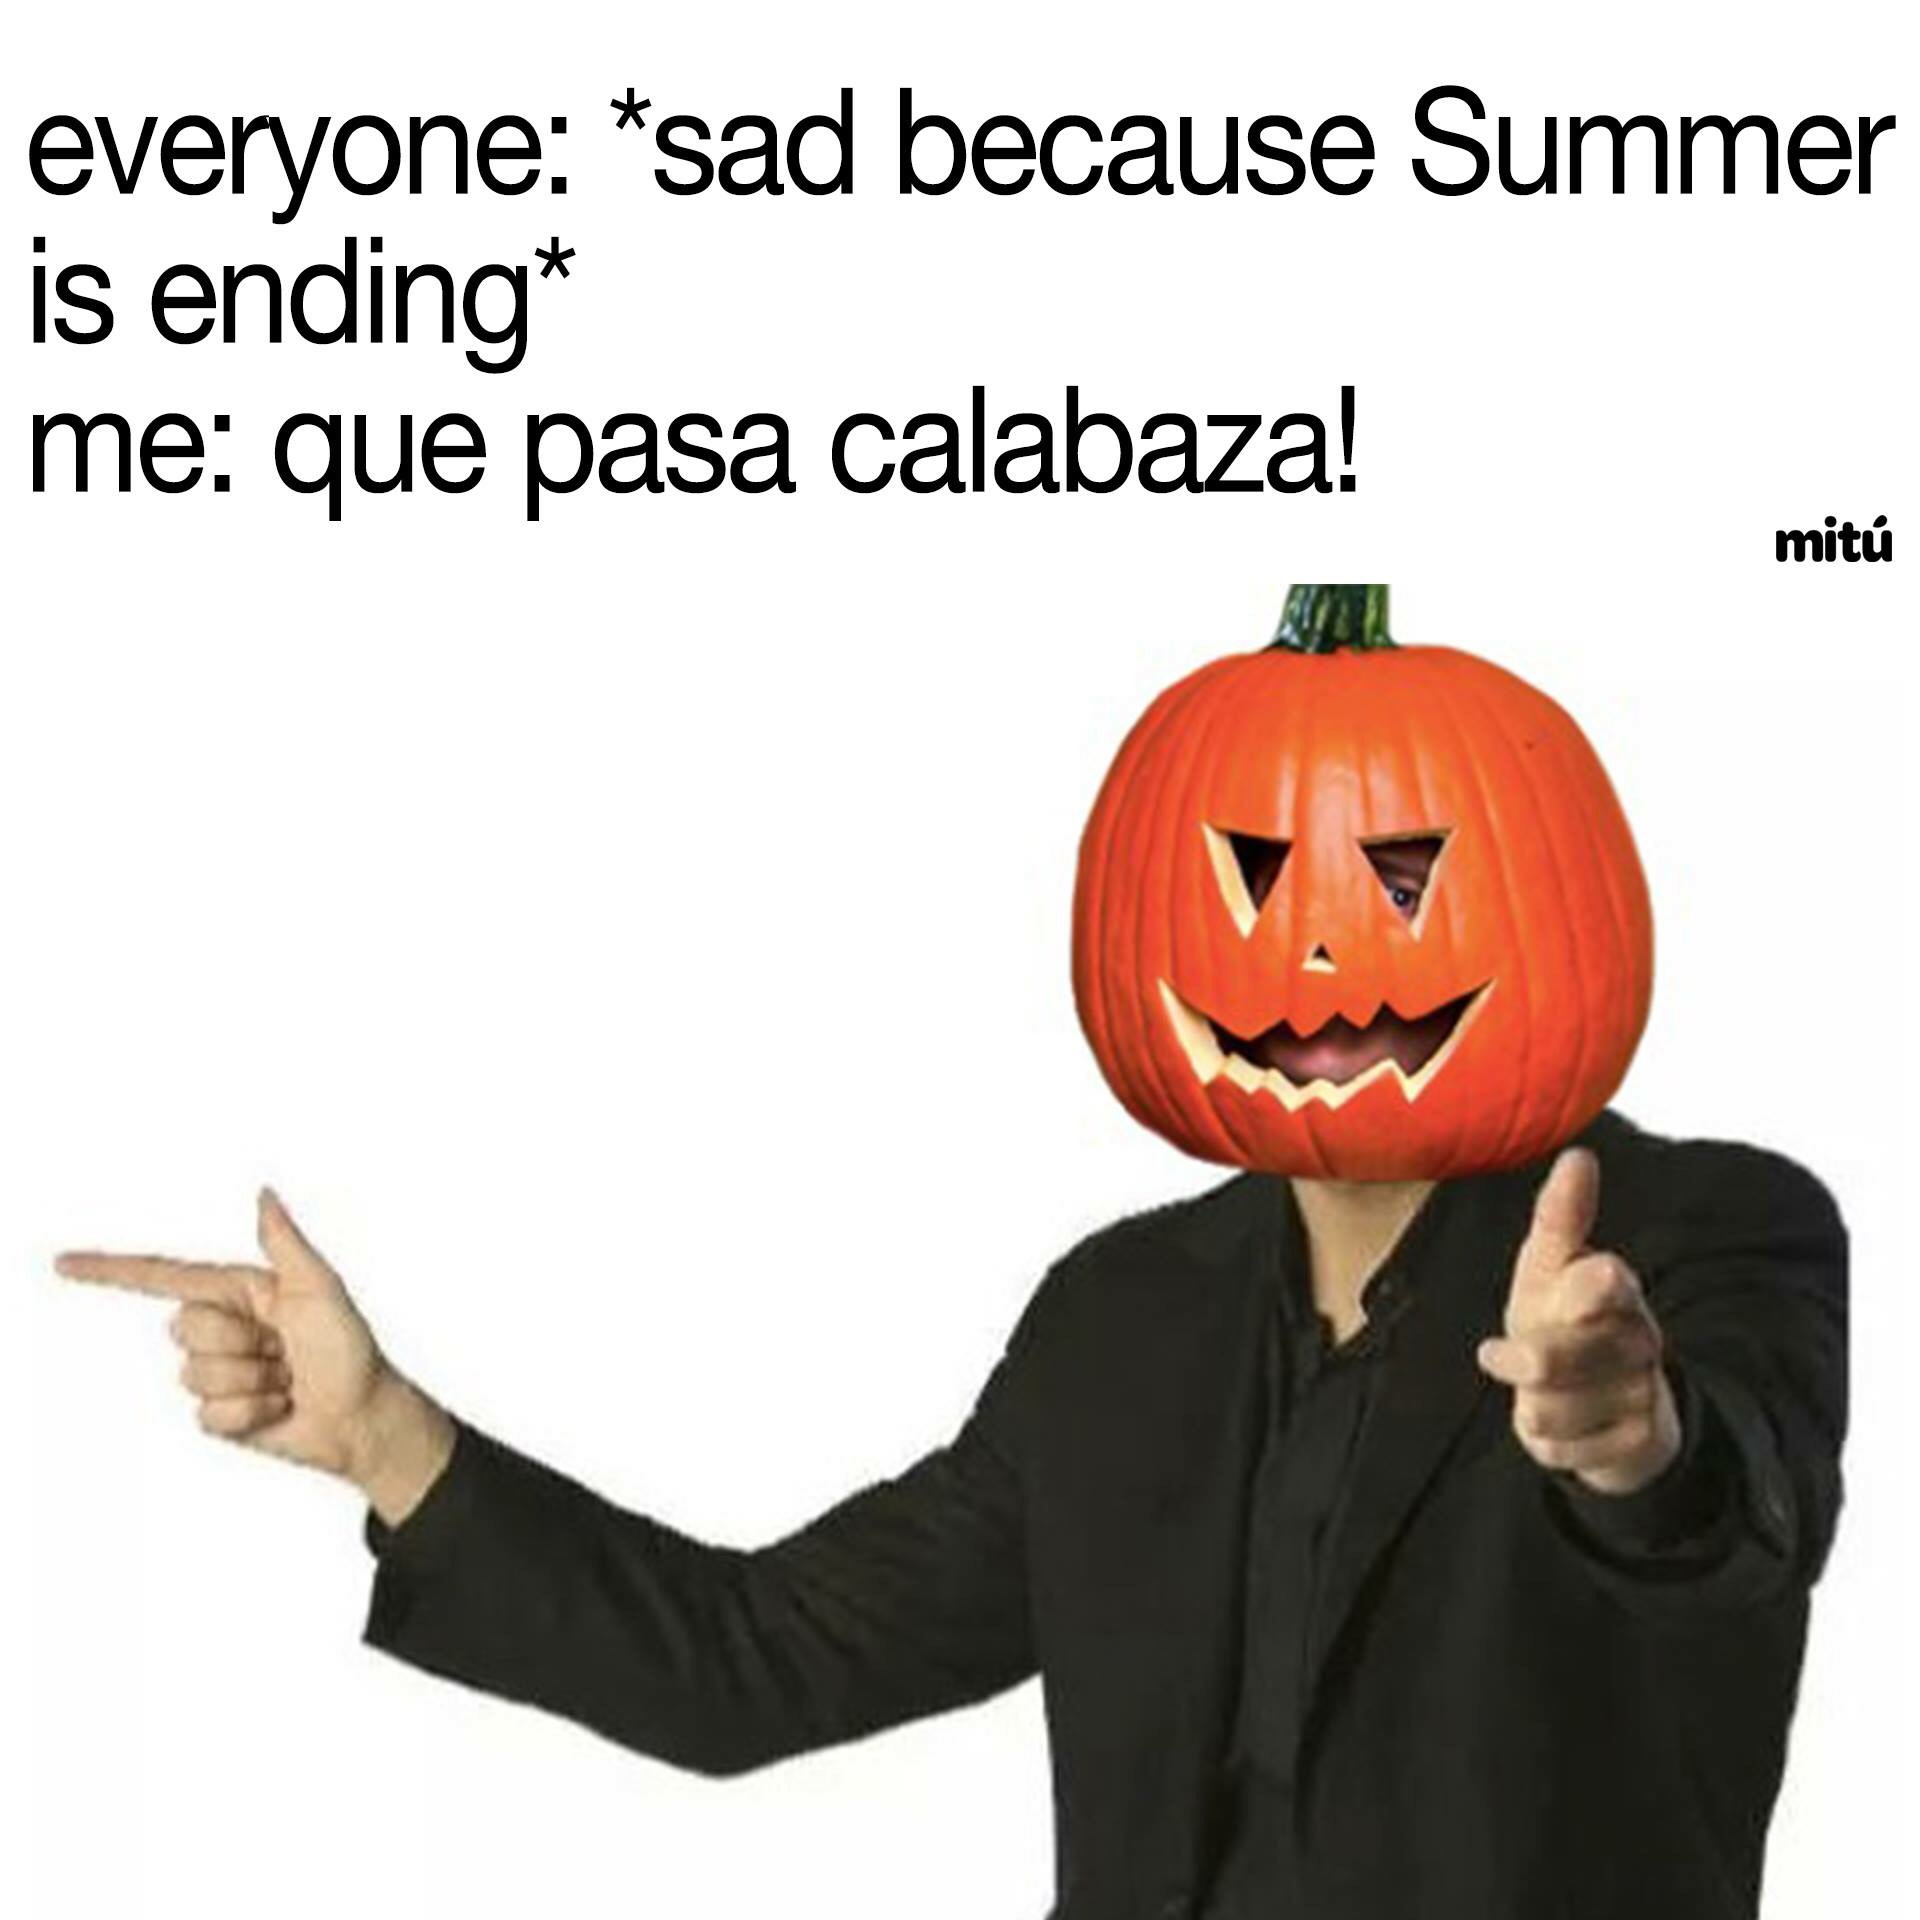 meme don t have 2020 vision meme - everyone sad because Summer is ending me que pasa calabaza! mit